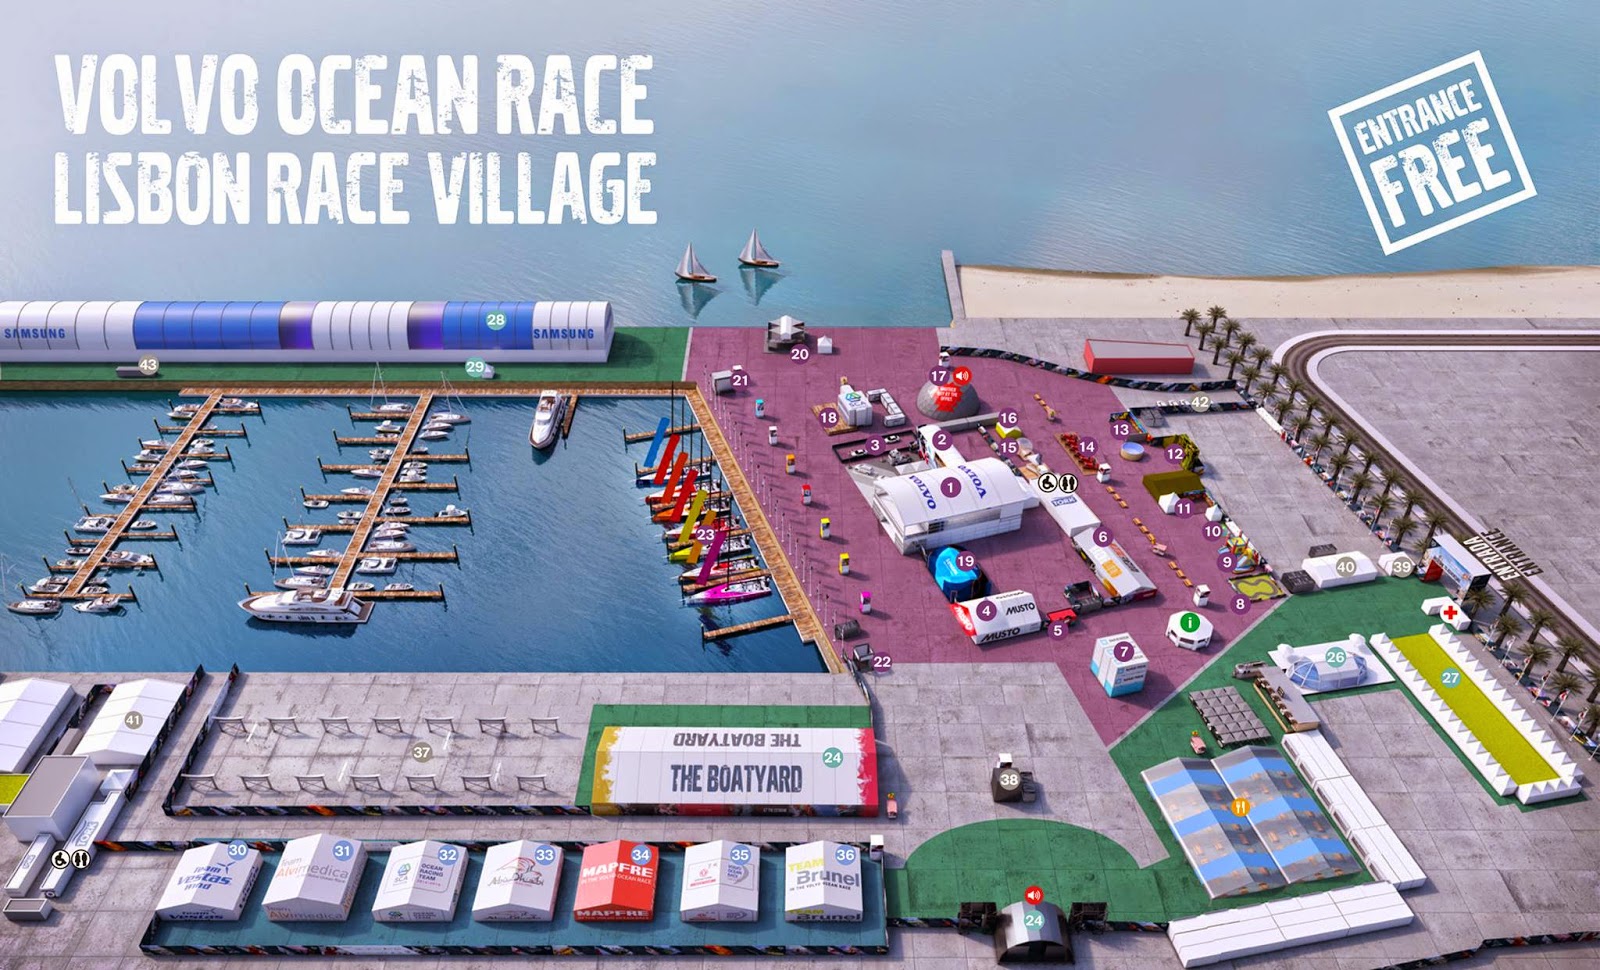 CARTAZ VOLVO OCEAN RACE 20151600 x 970